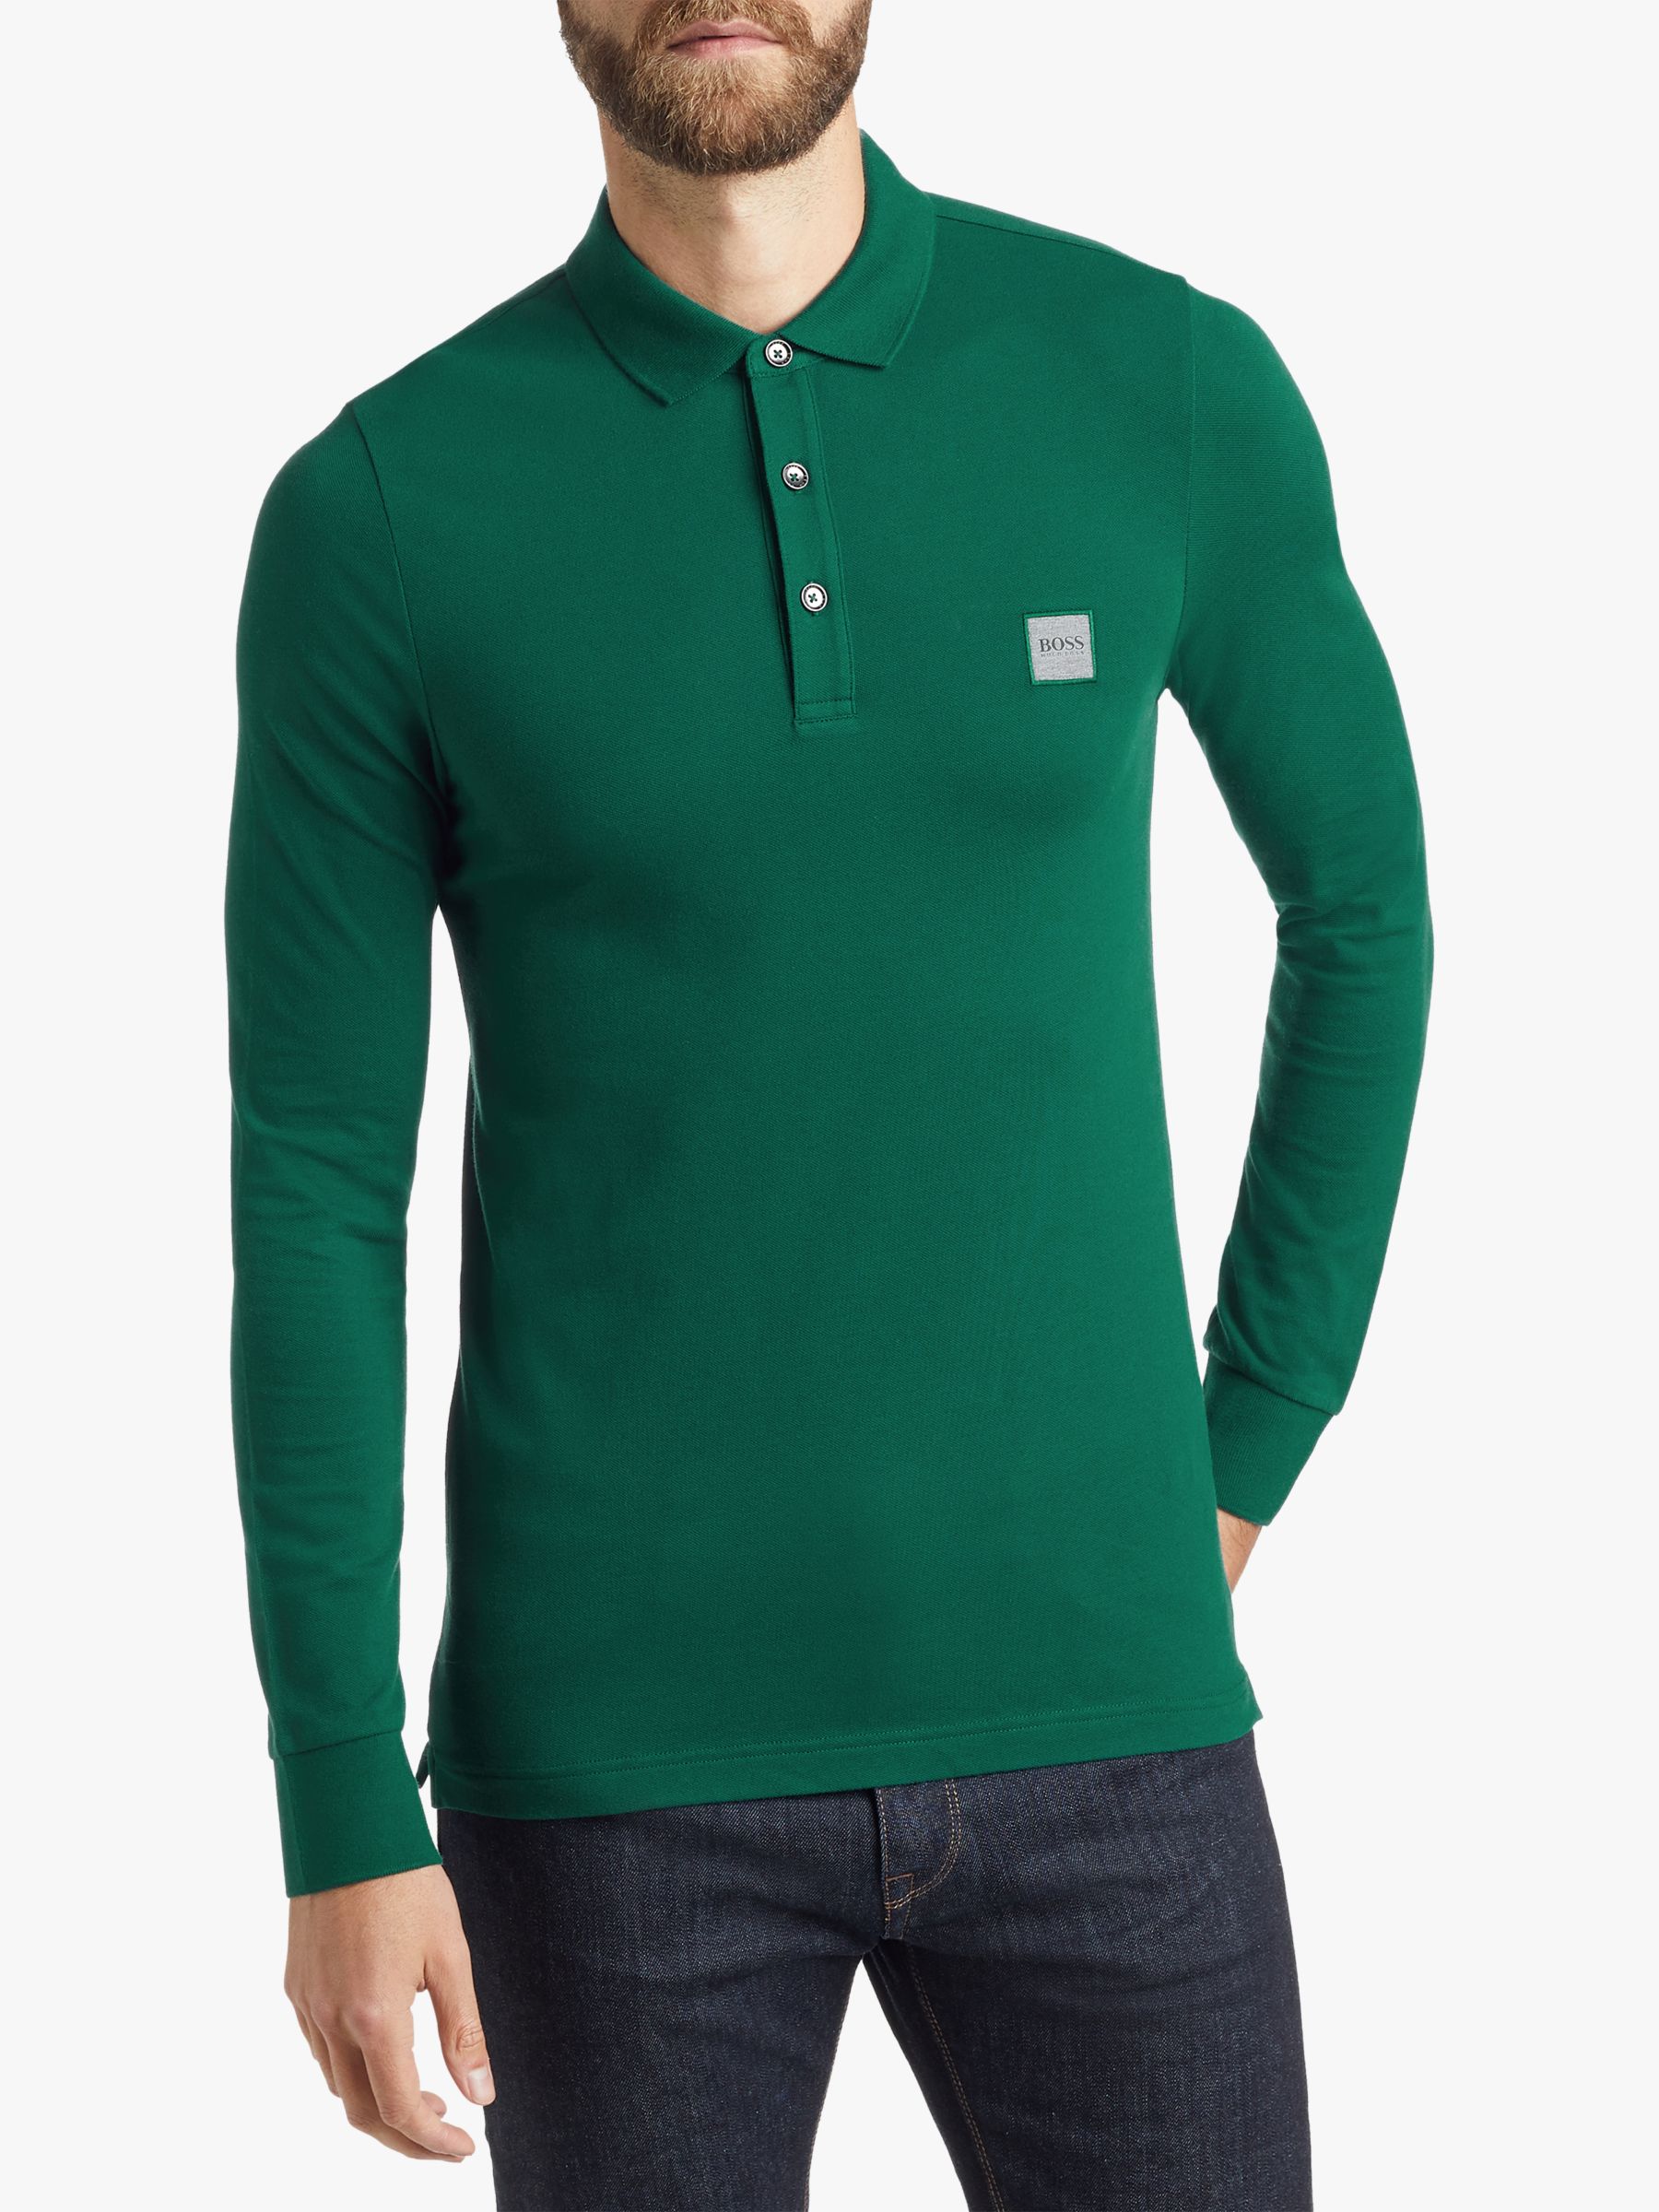 BOSS Passerby Long Sleeve Polo Shirt, Green, S